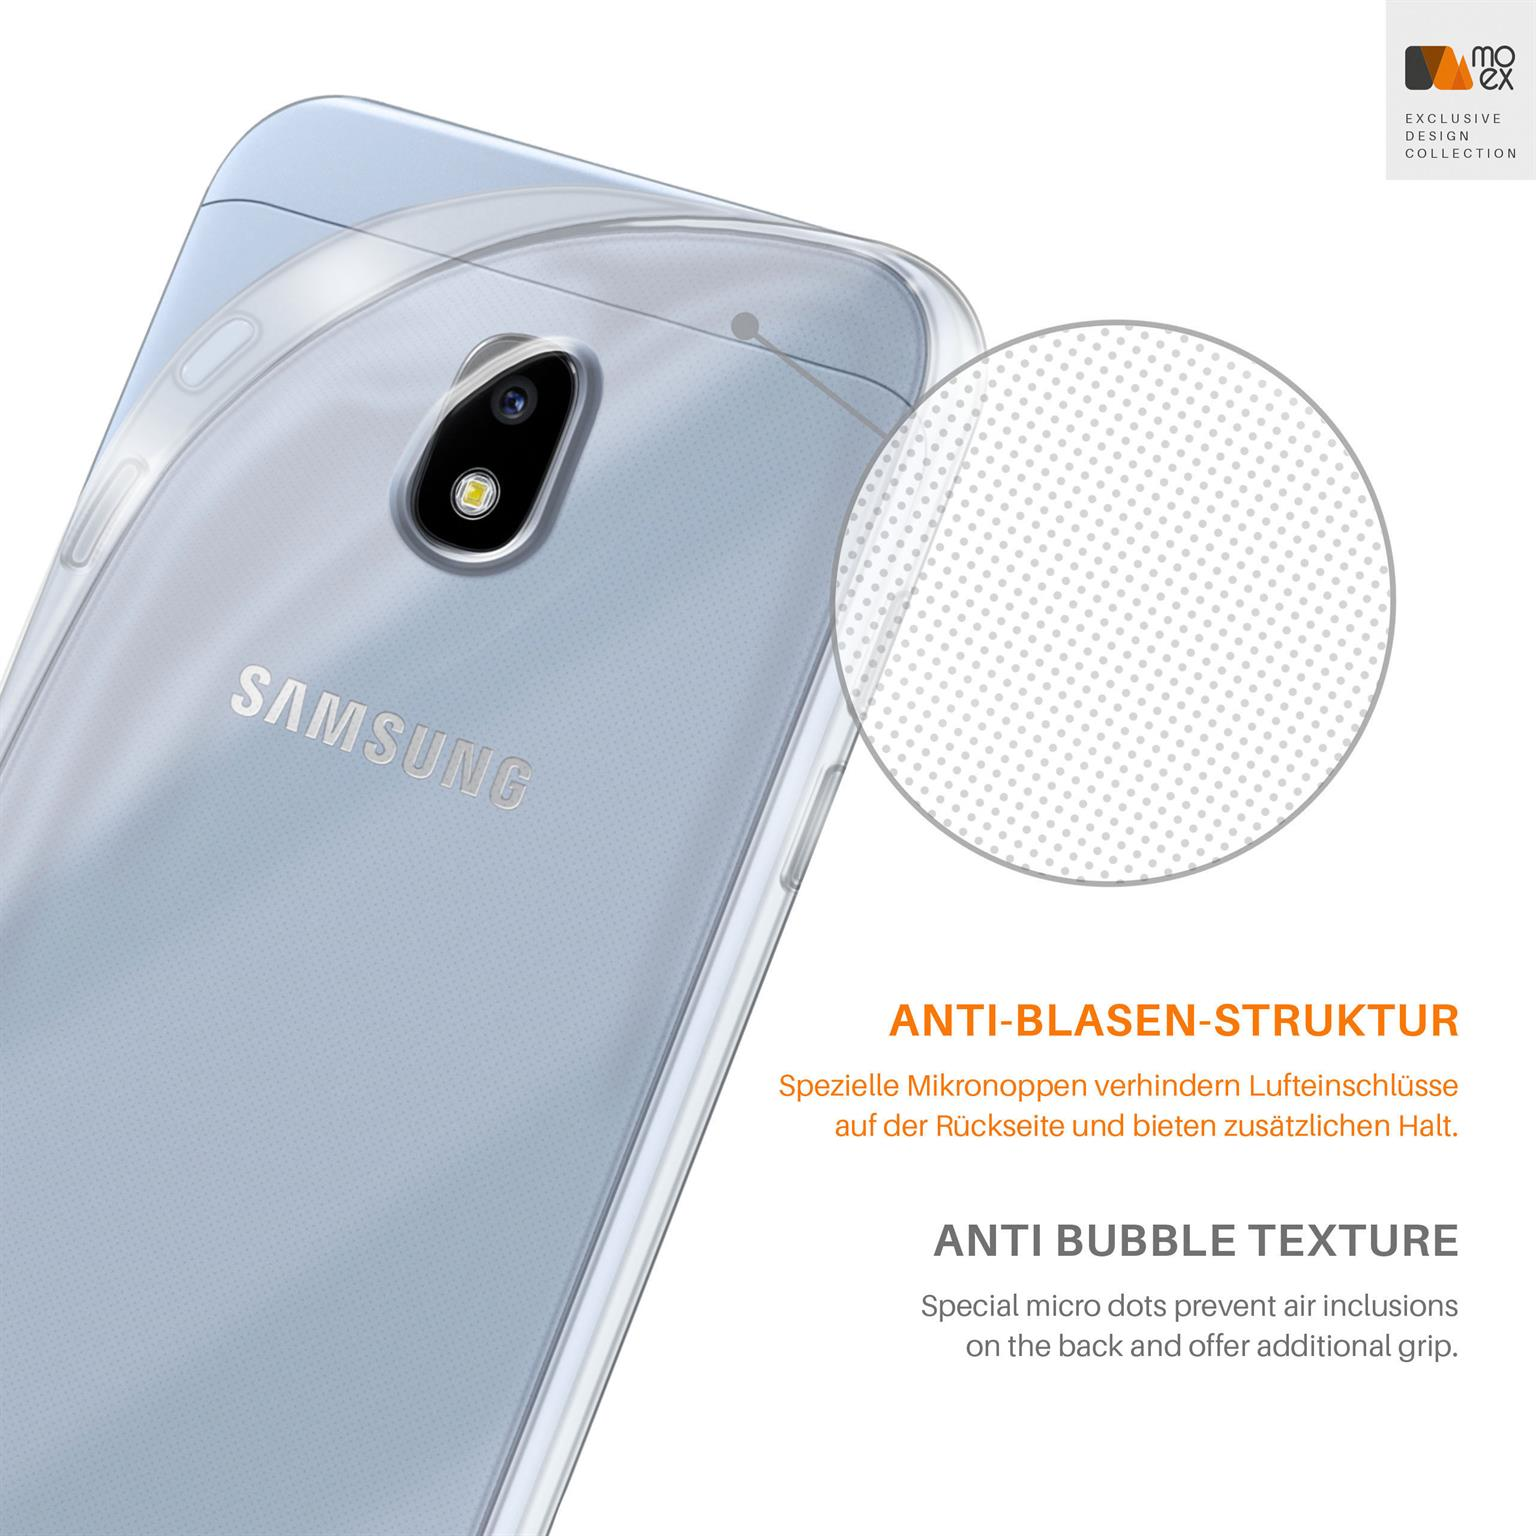 Samsung, Backcover, Aero MOEX Crystal-Clear Case, (2017), J3 Galaxy